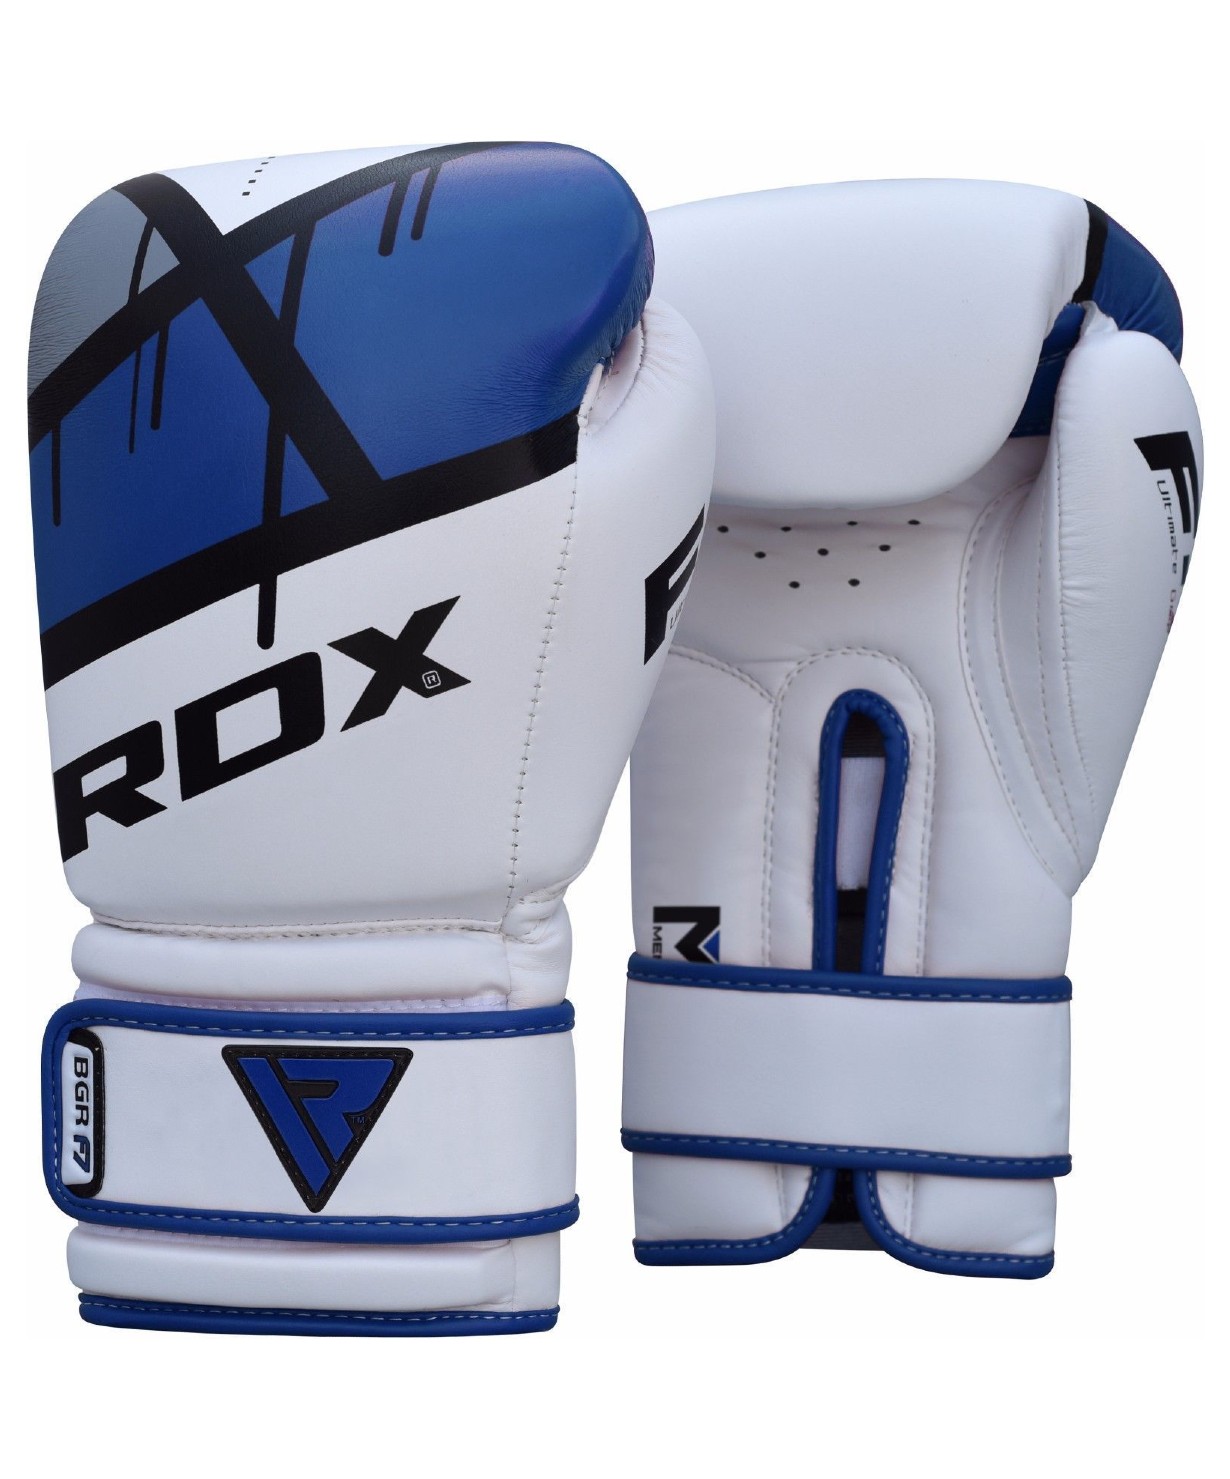 фото Rdx перчатки боксерские bgr-f7 blue bgr-f7u, 12 oz